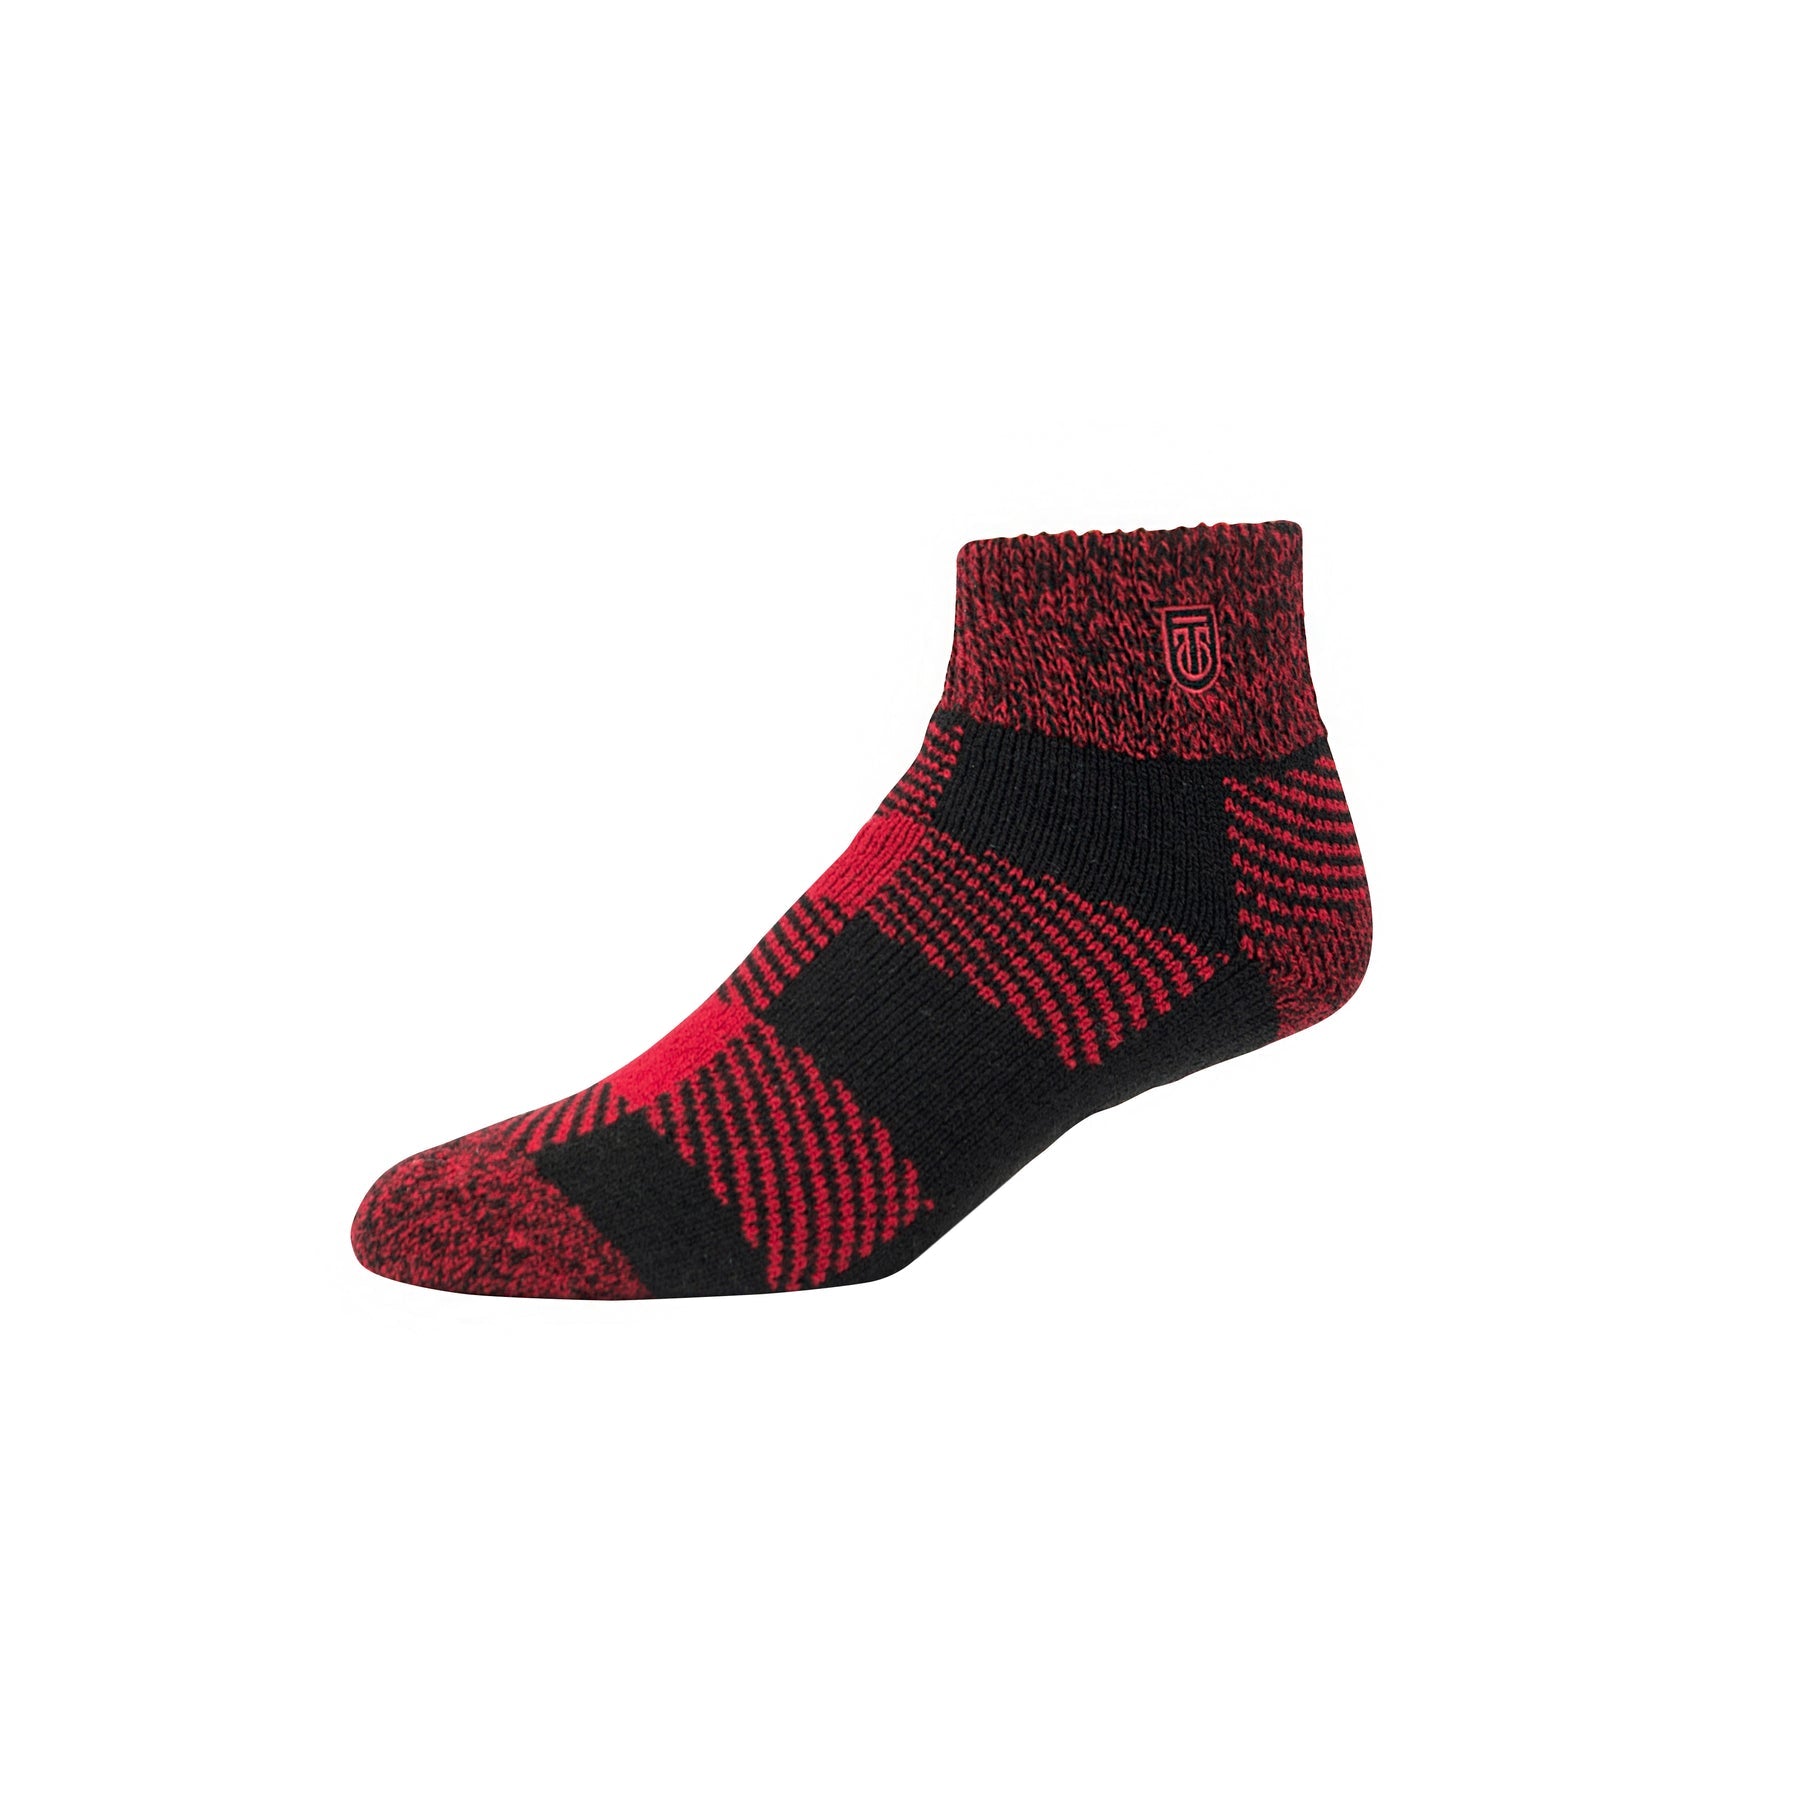 The Cabin Slipper Socks product image